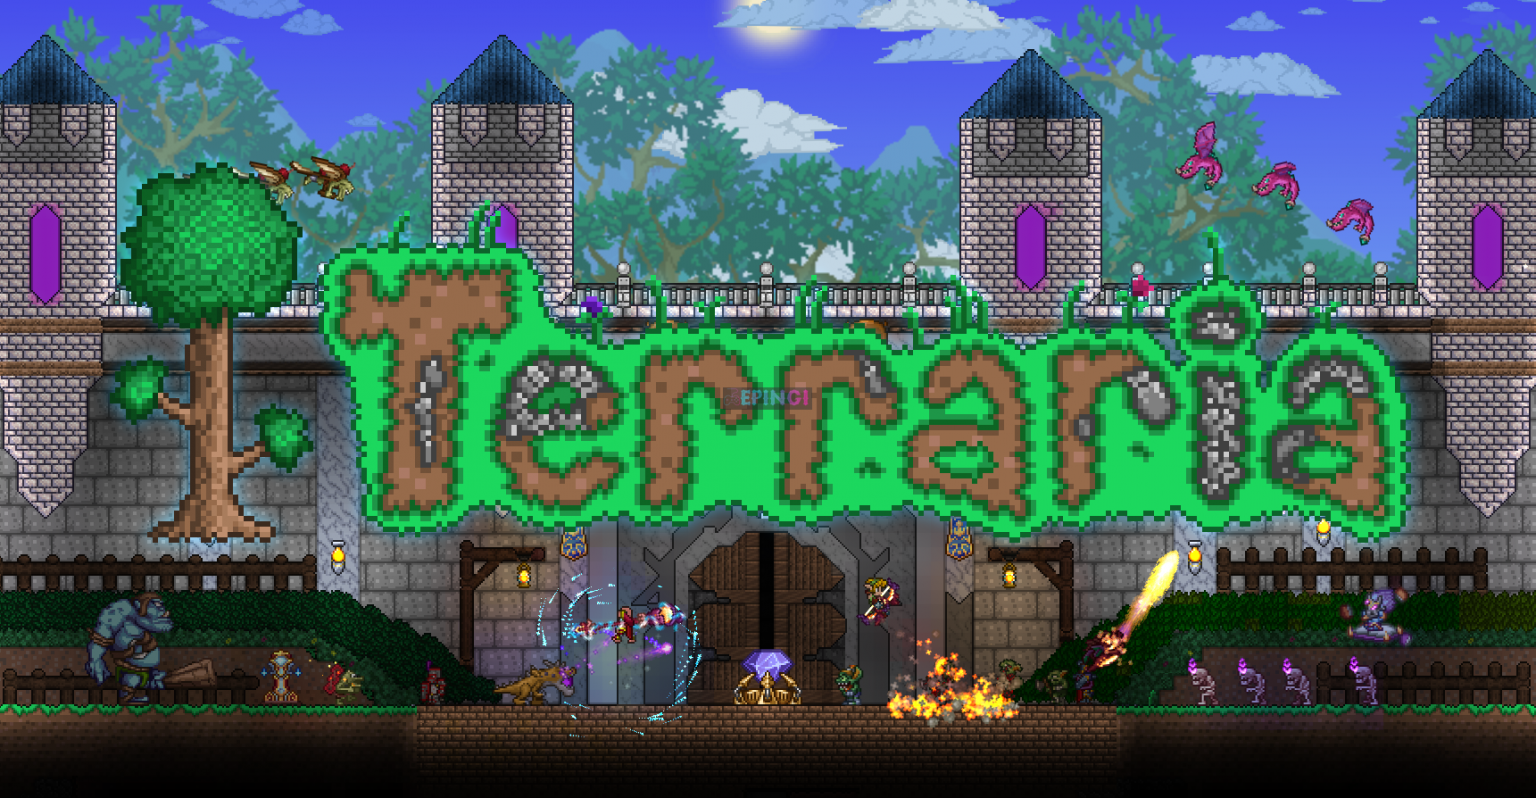 Terraria Version Full Mobile Game Free Download